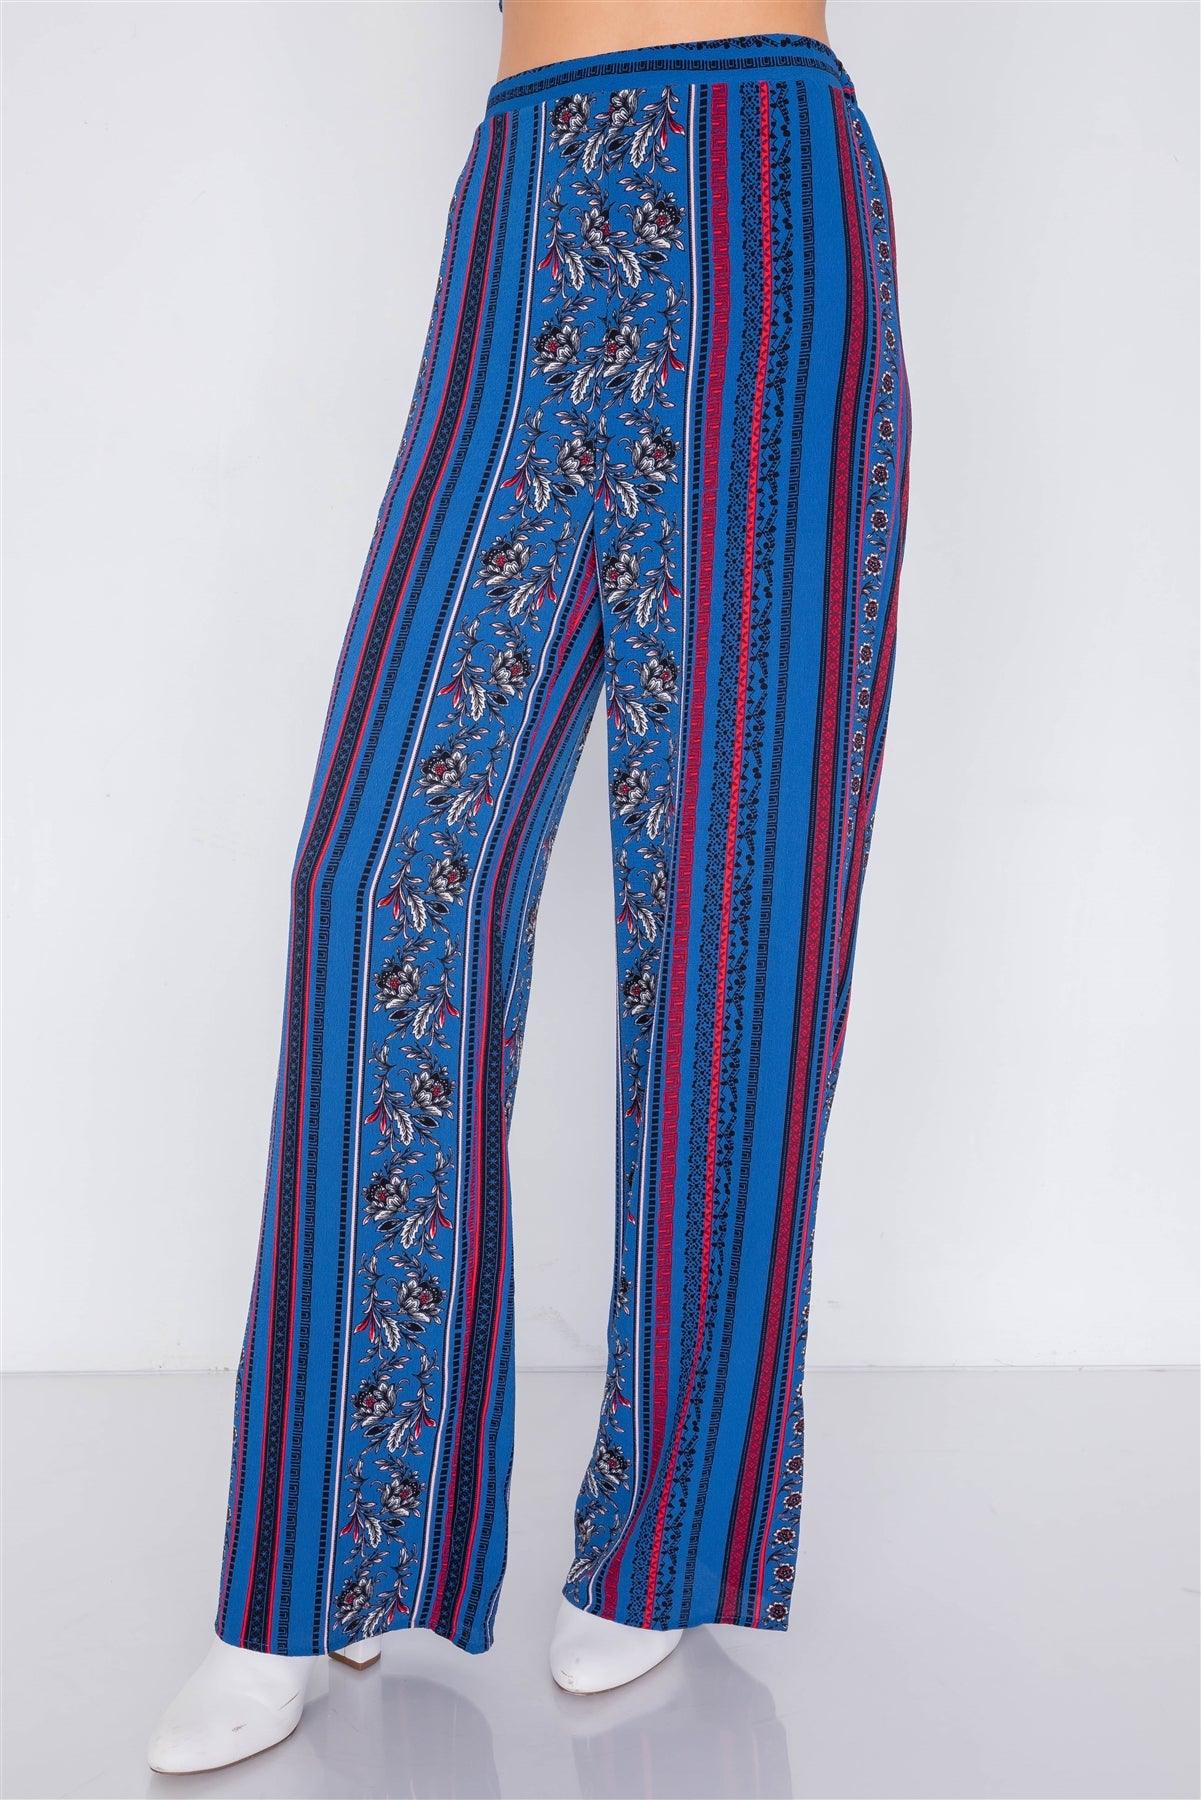 Marine Blue Multi Boho Print Cut Out Crop Top & Chic High Waist Wide Leg Pant Set  /3-2-1